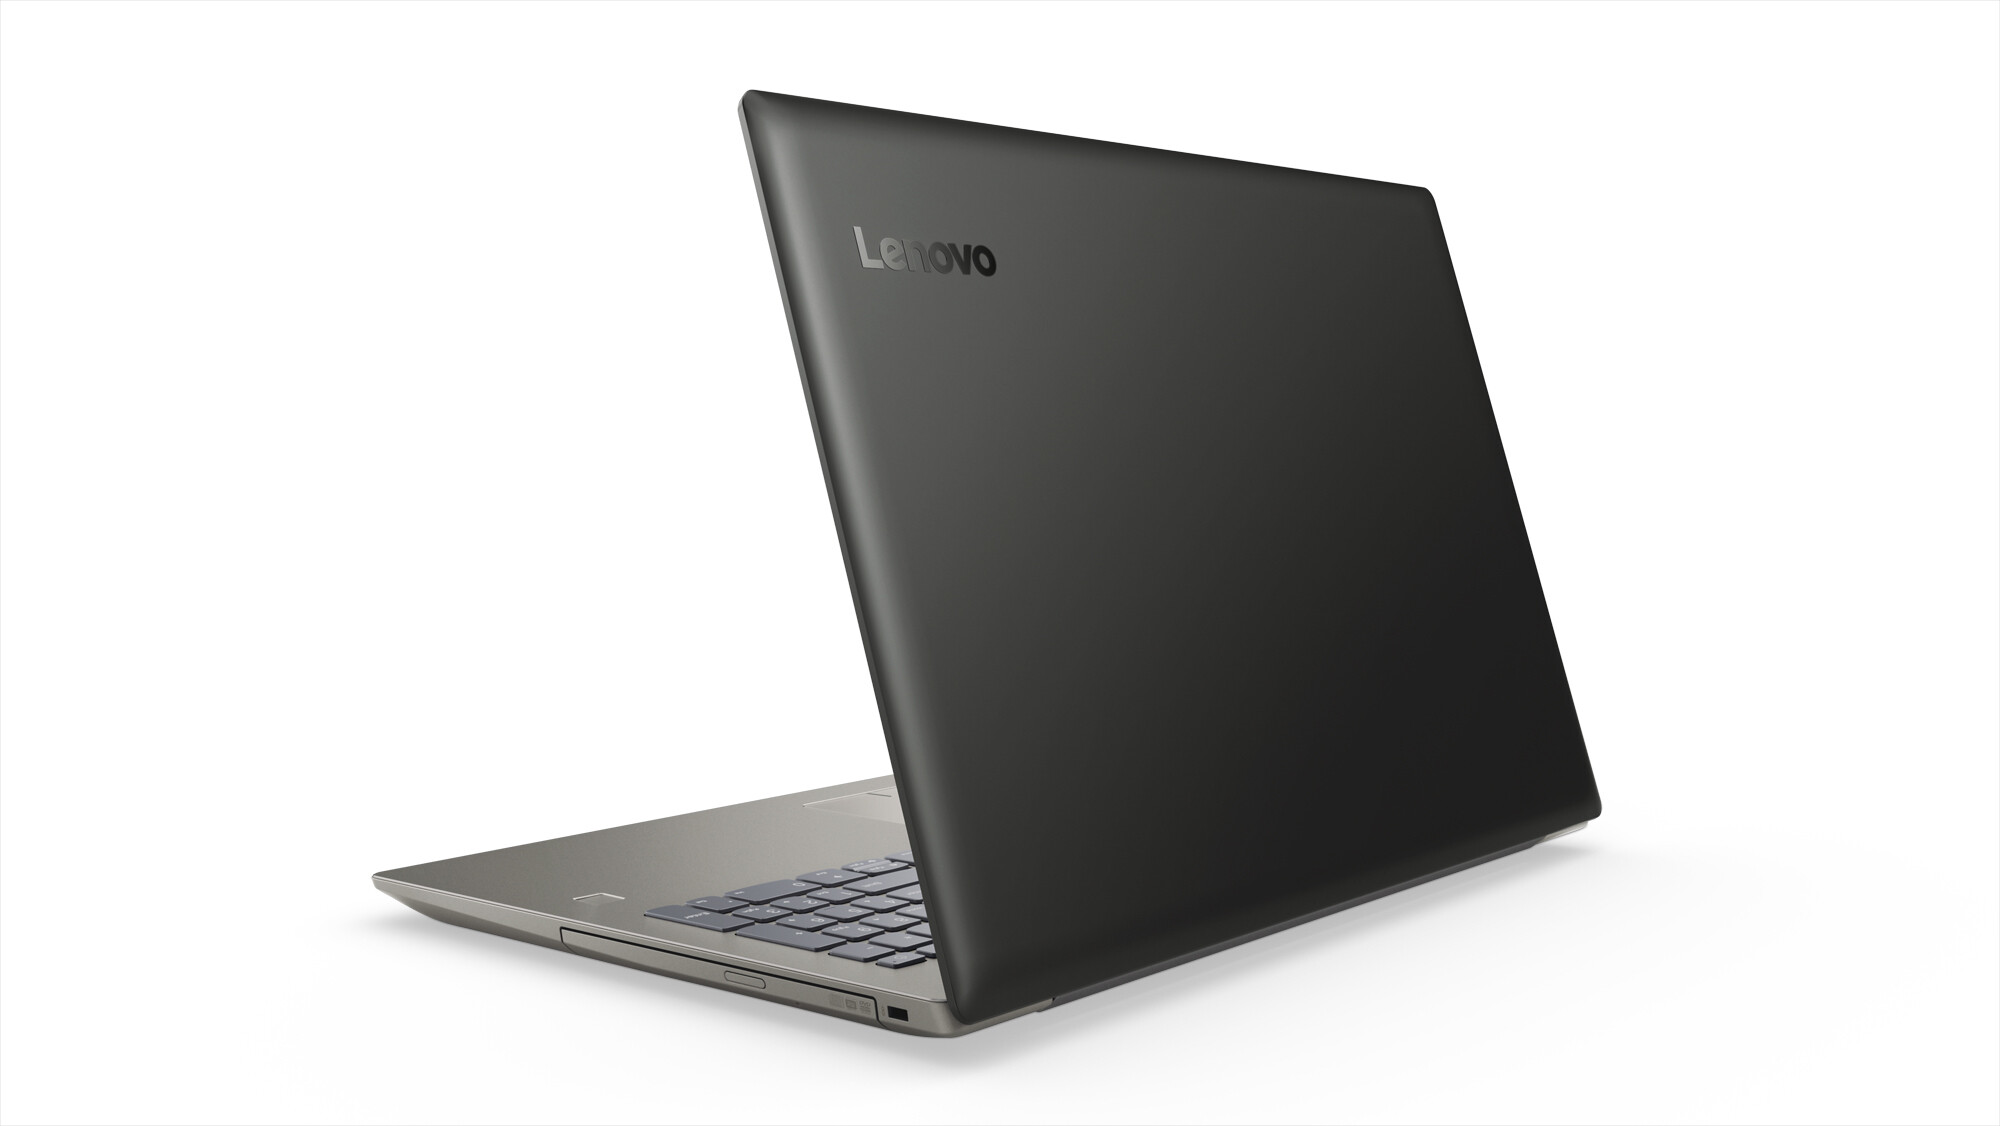 Lenovo Ideapad 520 Series - Notebookcheck.net External Reviews